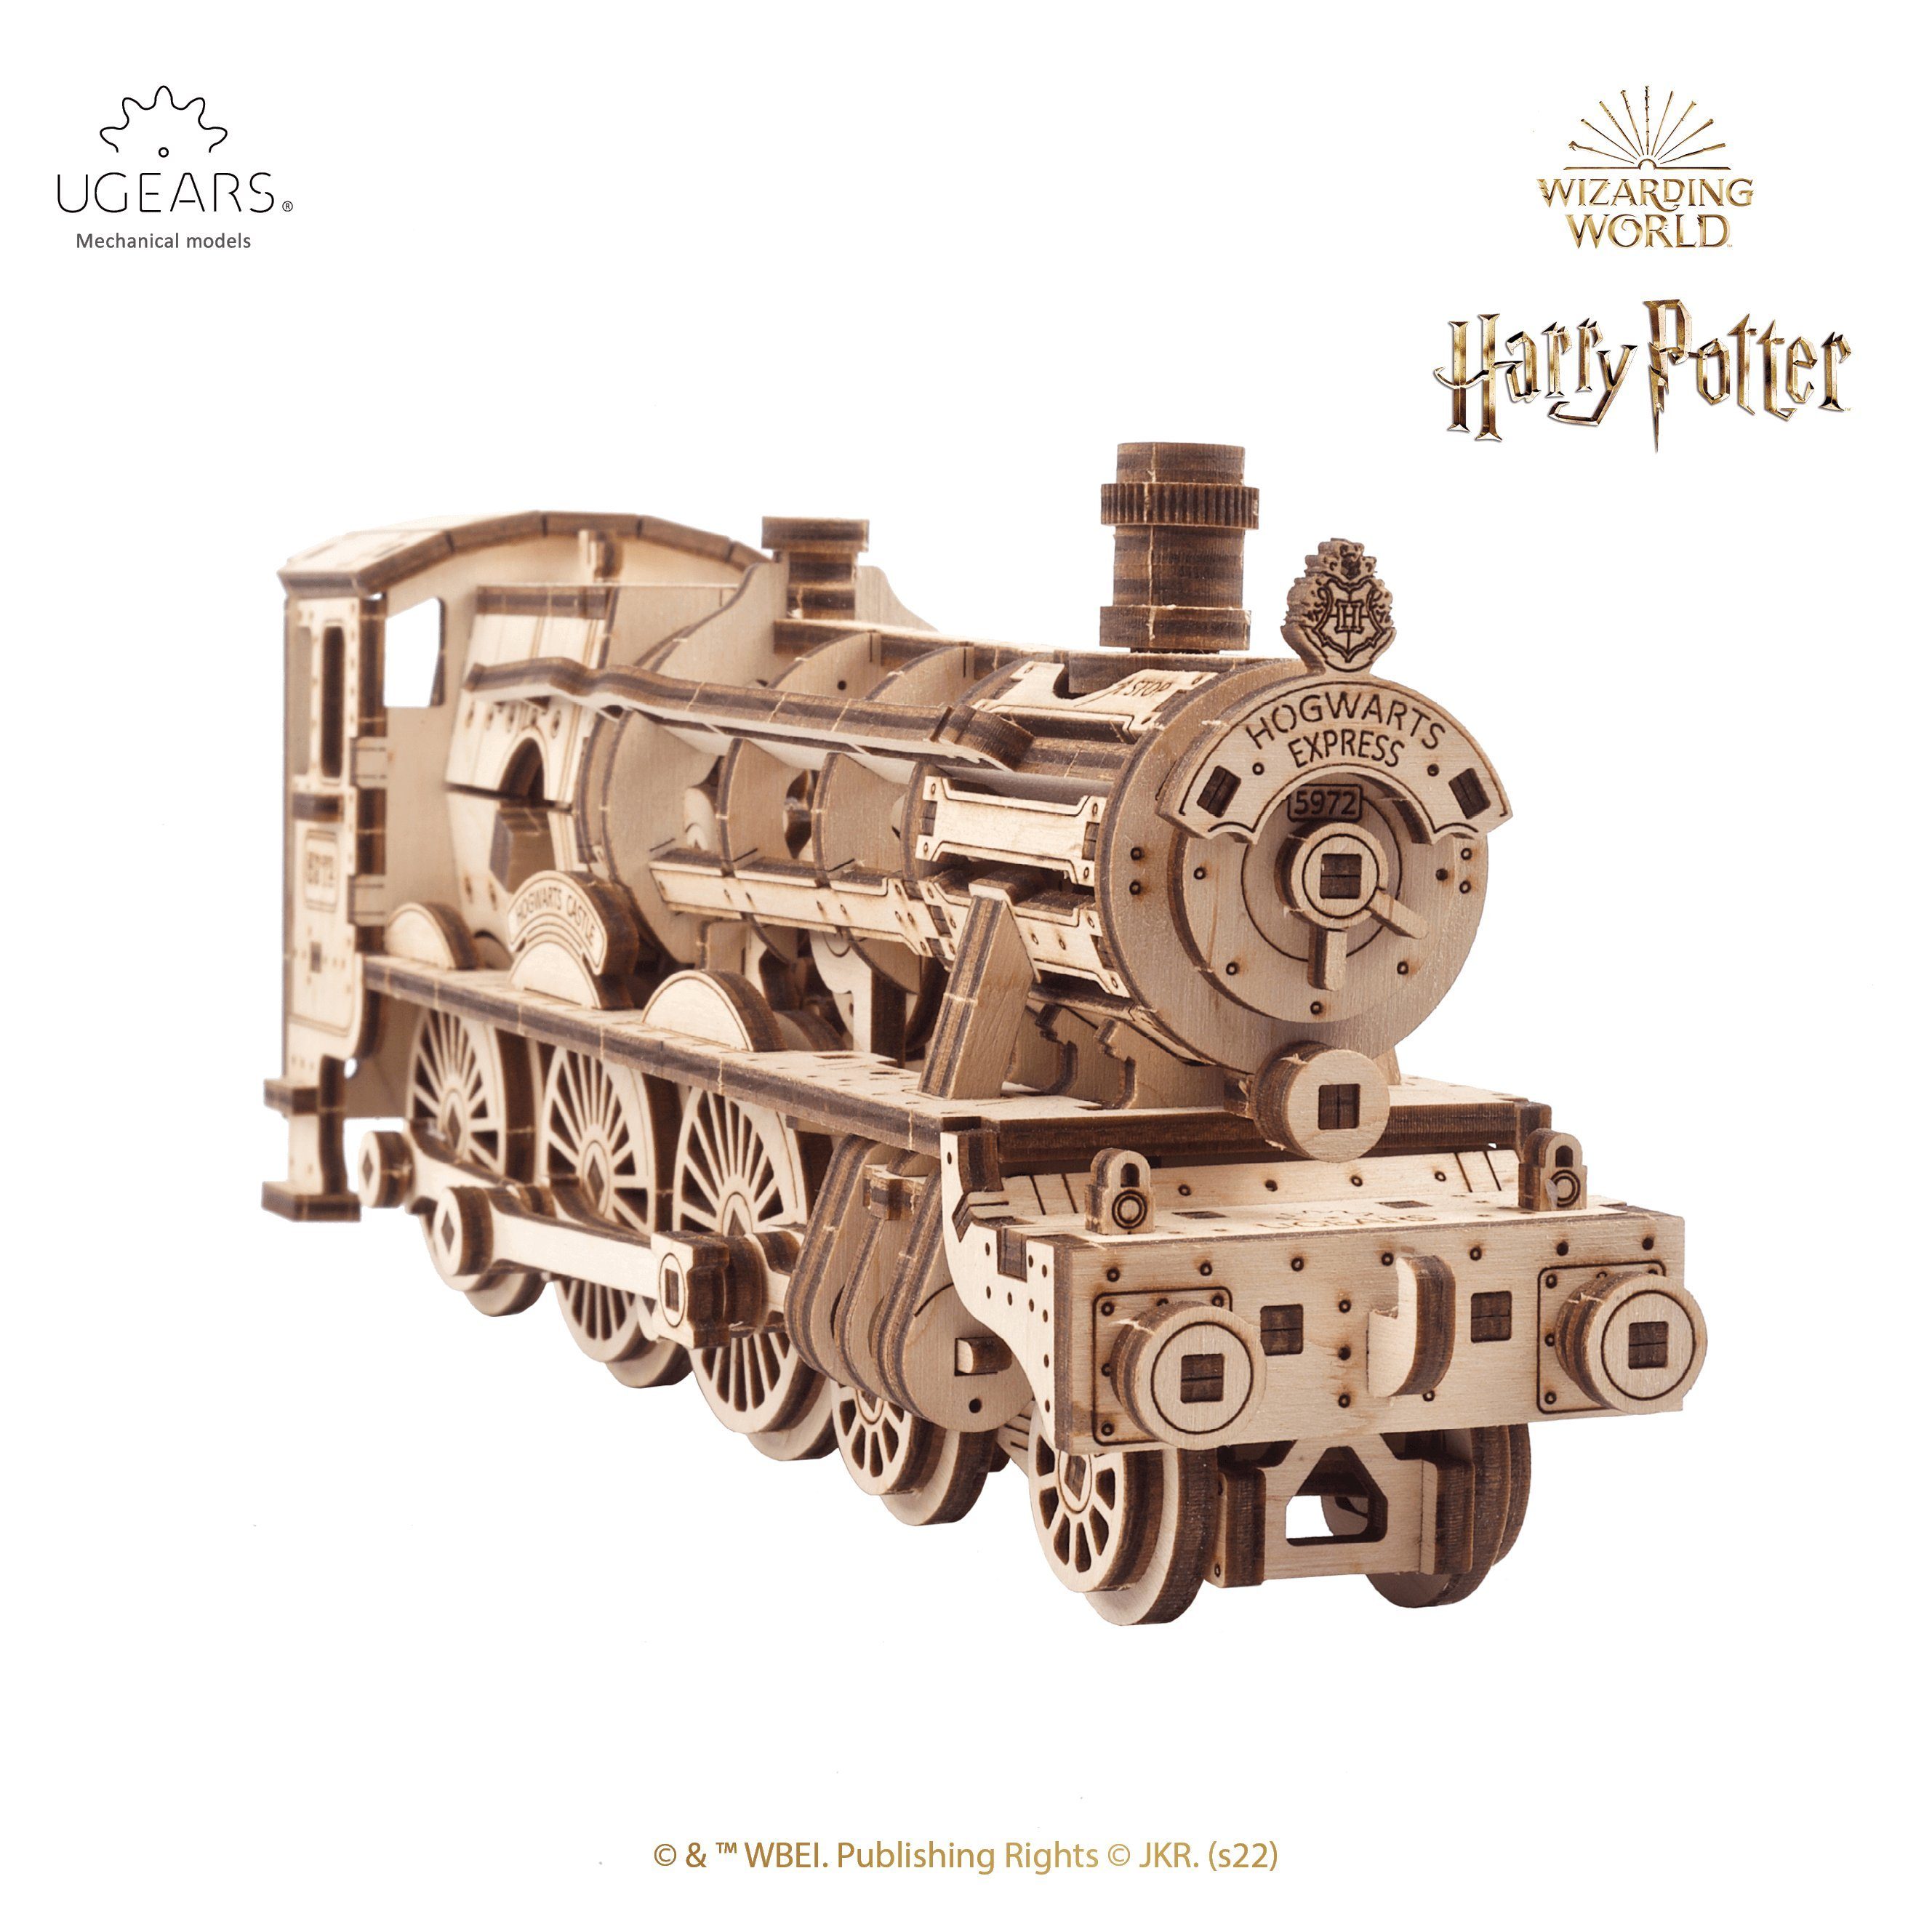 UGEARS Puzzle Ugears Hogwarts Express™ Harry Potter Mechanisches Holzpuzzle, 504 Puzzleteile